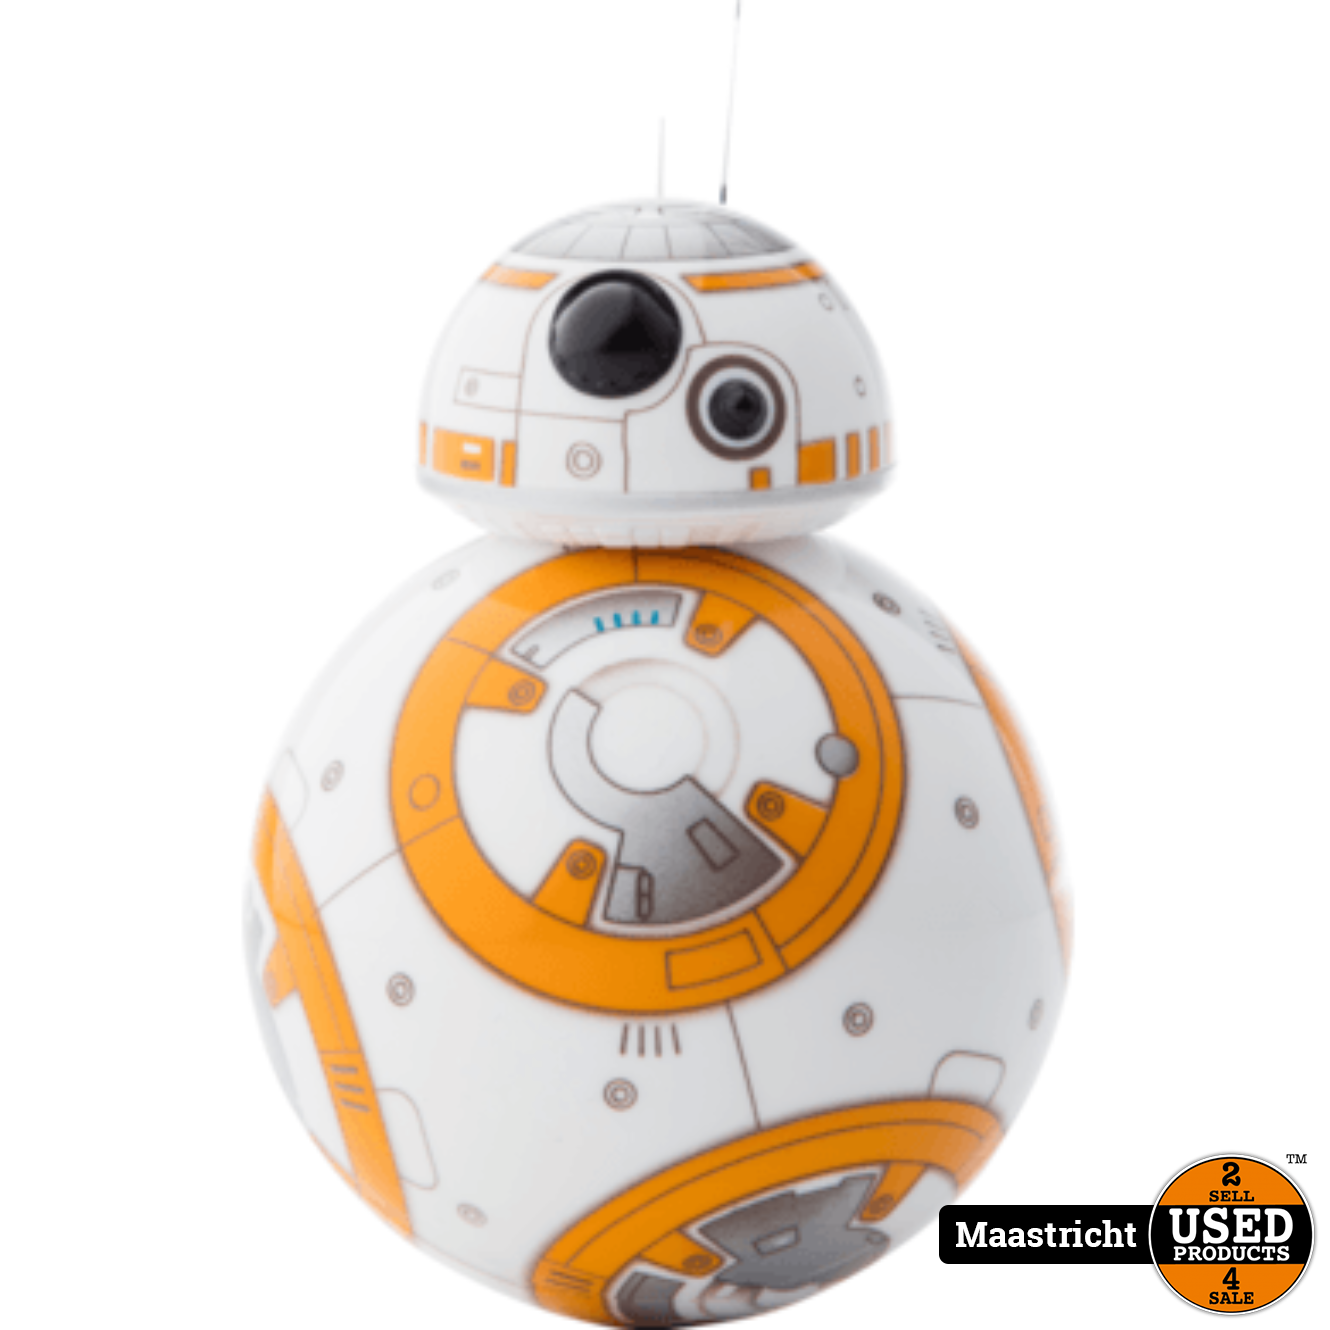 ding Vleugels Beven Sphero Star Wars BB-8 Droid Robot Speelgoed | elders te koop voor 219 euro  - Used Products Maastricht